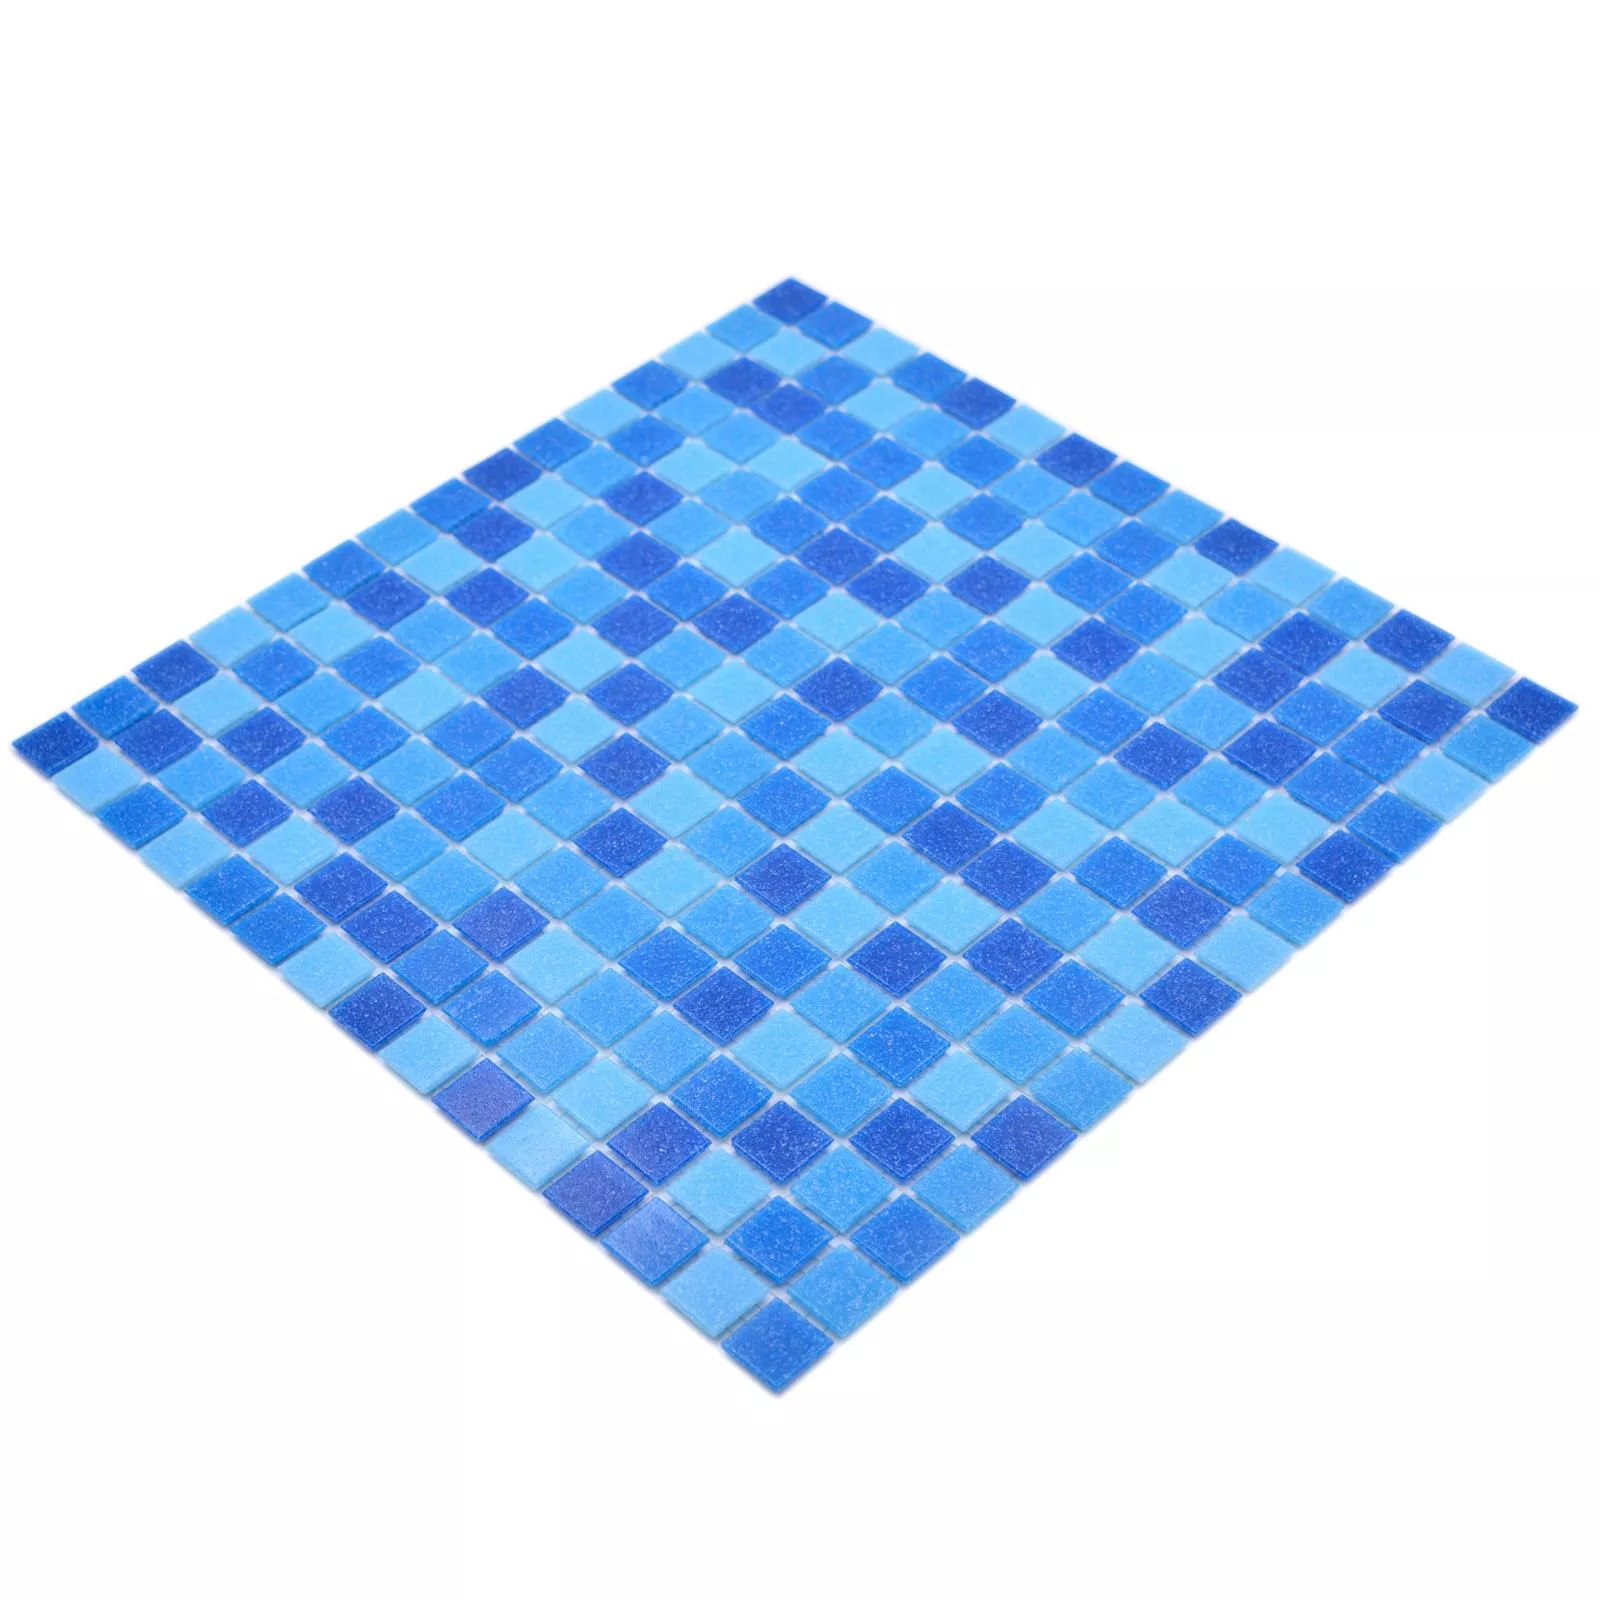 Sample Swimming Pool Mosaic North Sea Blue Light Blue Mix